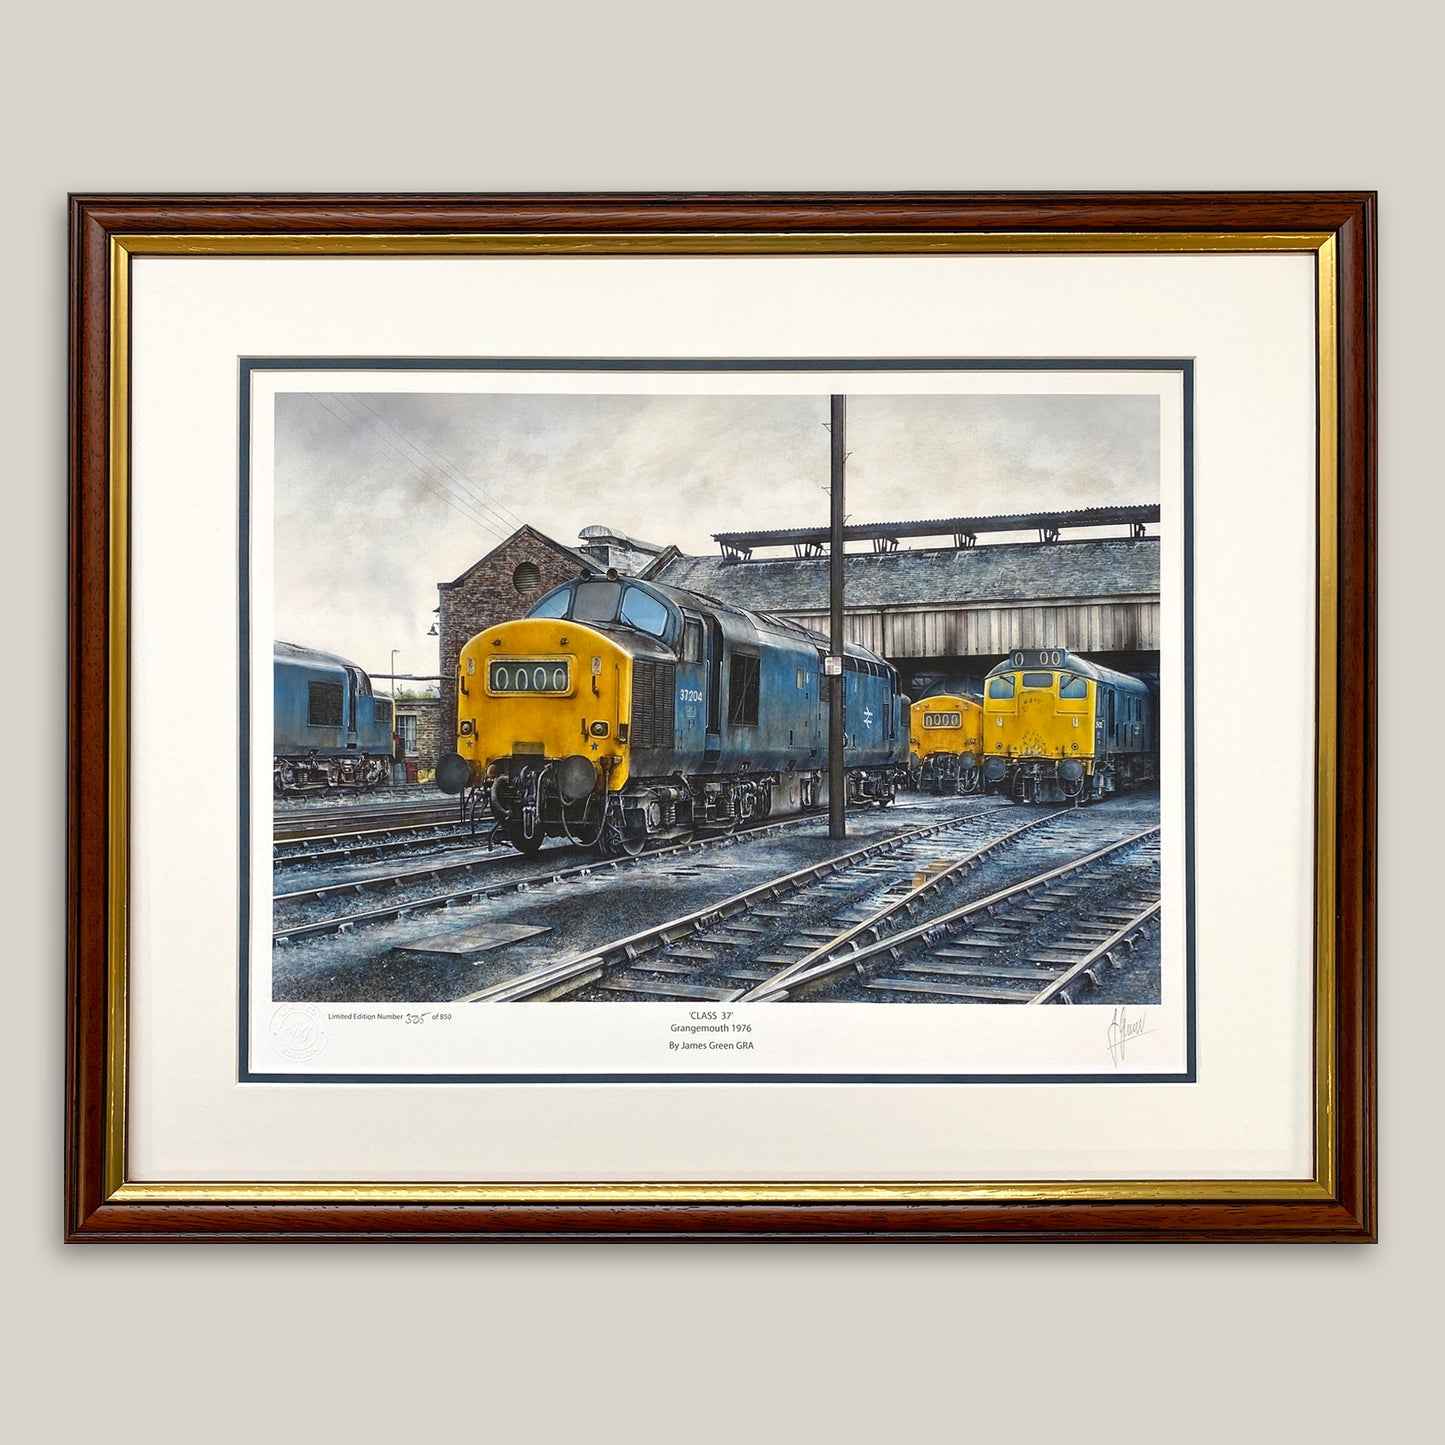 A fine art print of class 37 trains at Grangemouth framed in a dark wood frame